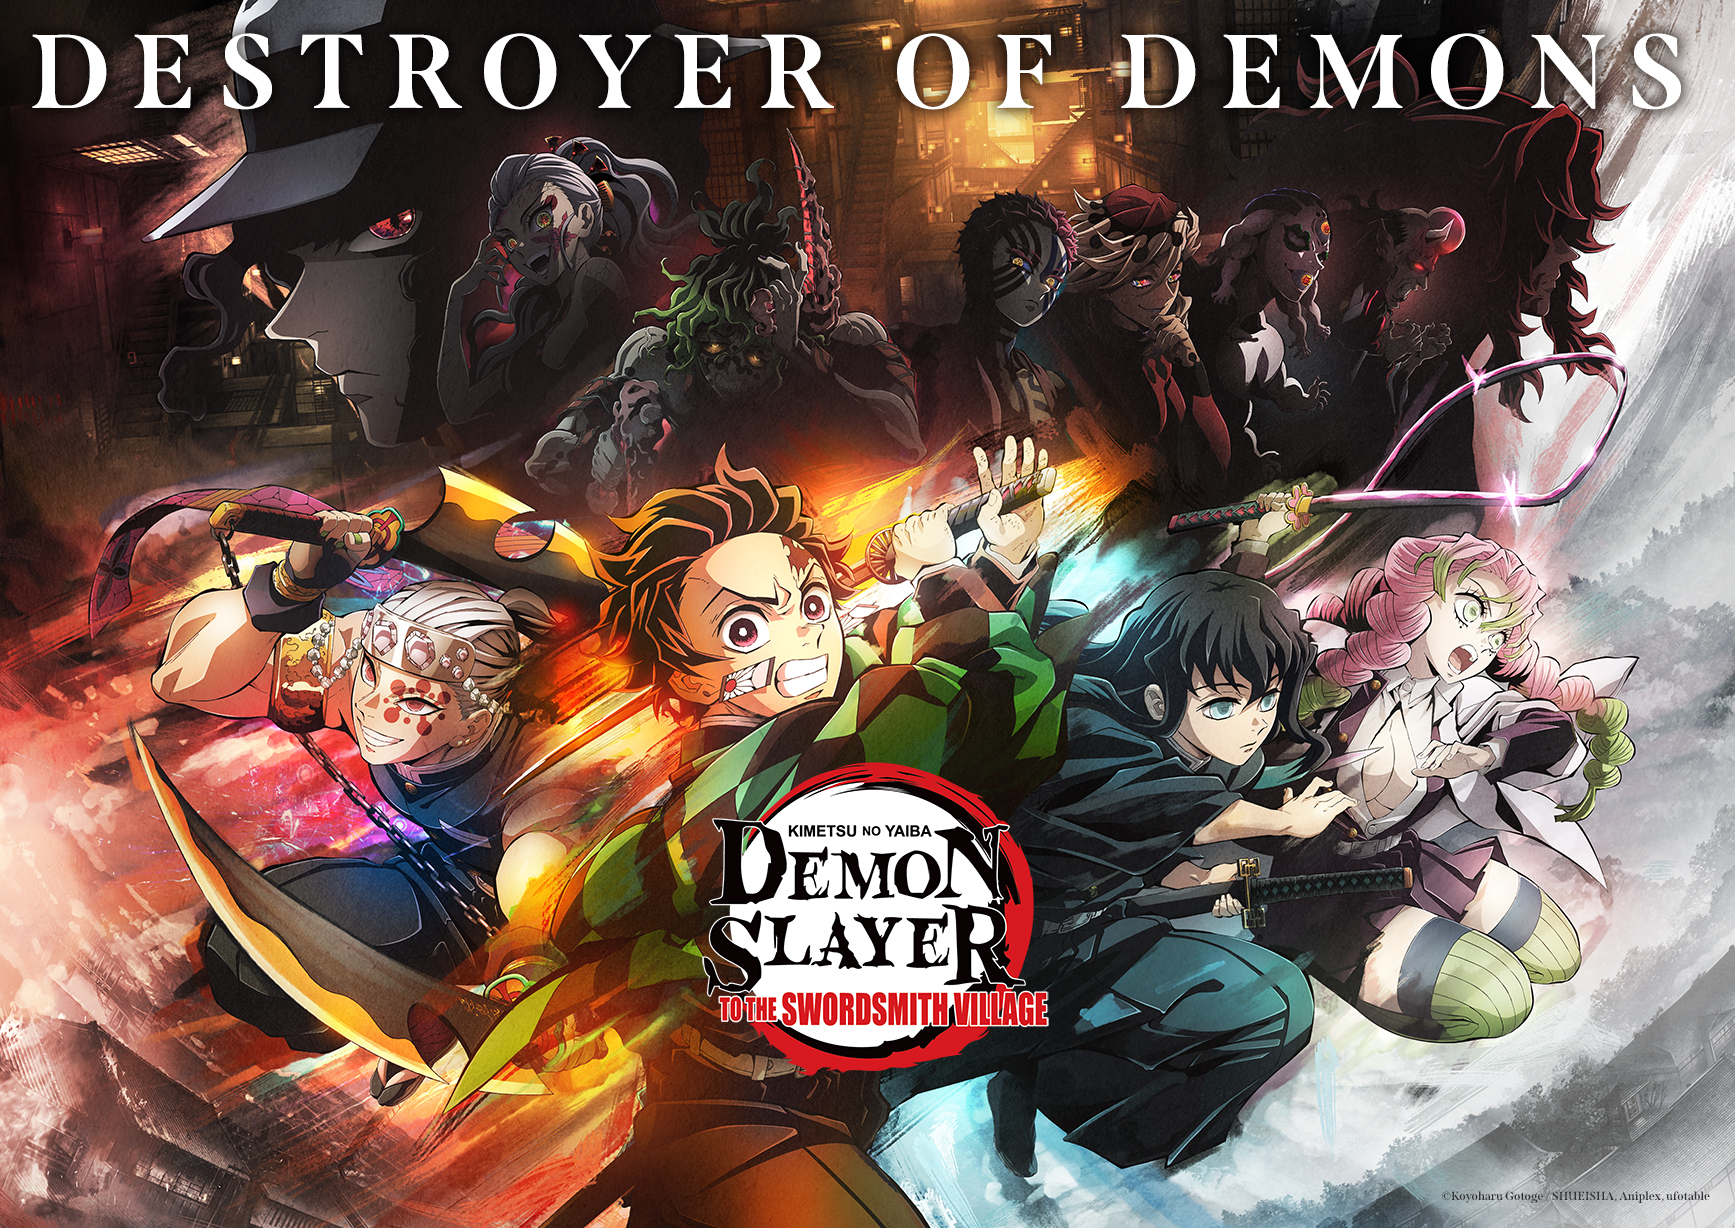 Demon Slayer' Season 4 Coming to Netflix in September 2023